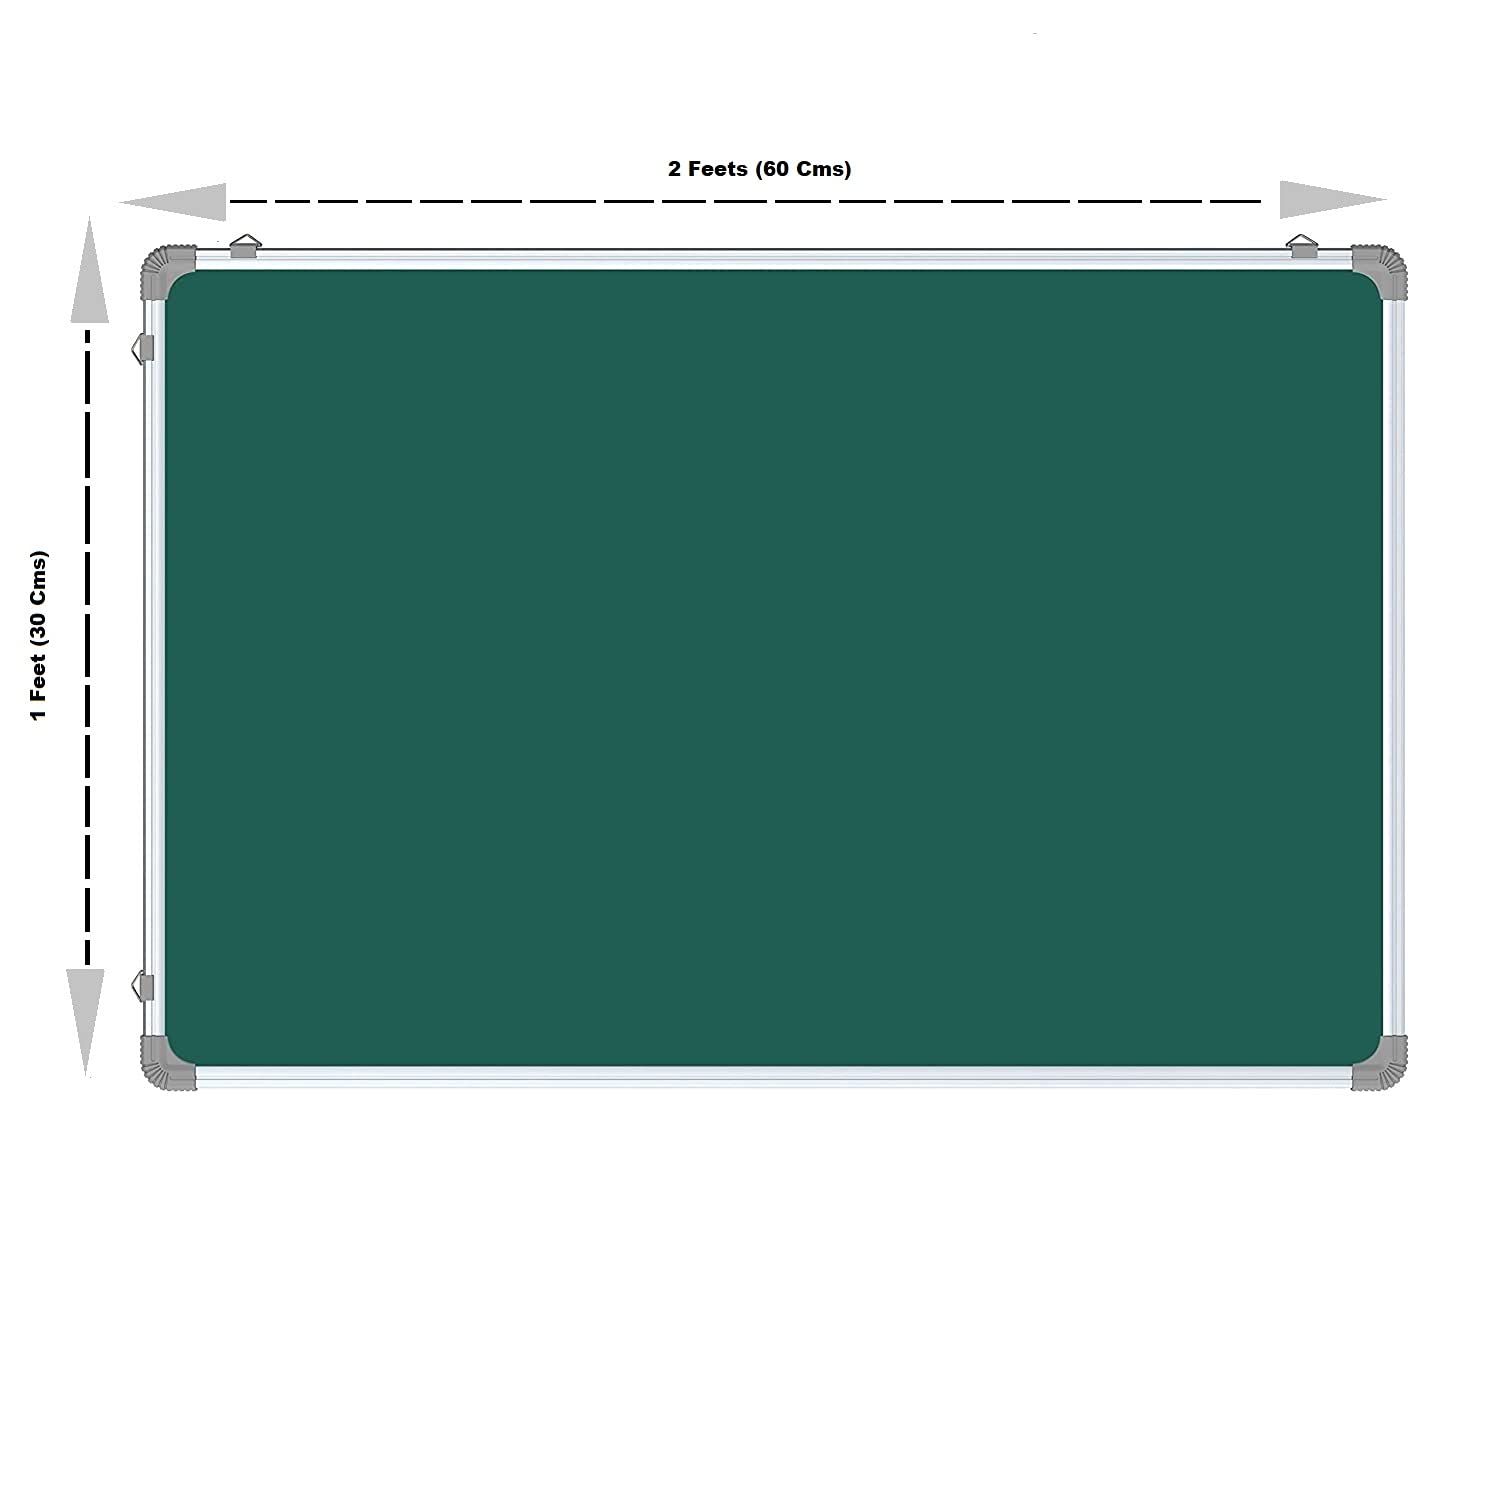 OBASIX® Classic Series Green Chalk Board 1x2 Feet (Non-Magnetic) | Aluminium Frame CGCB3060